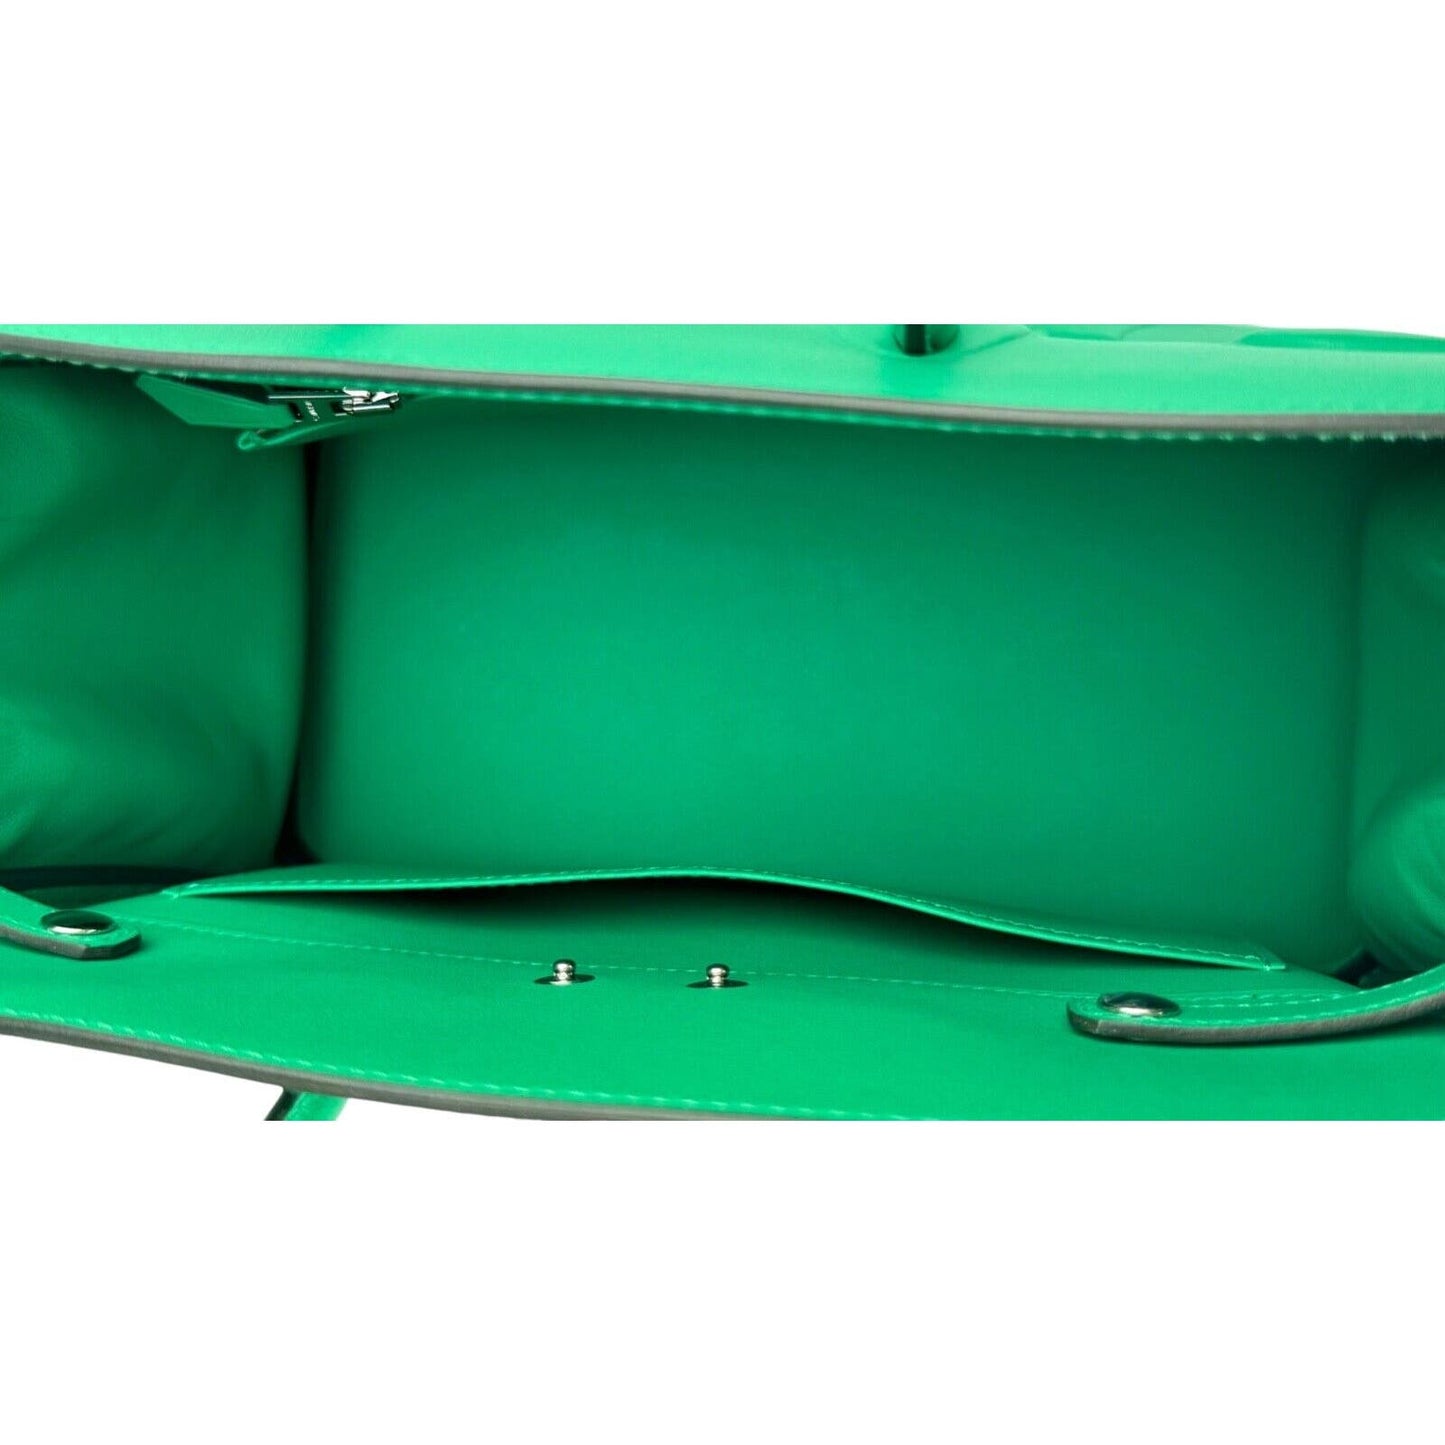 Hermes Birkin 25 Shadow Menthe Mint Green Swift Leather Handbag Bag Limited Edition